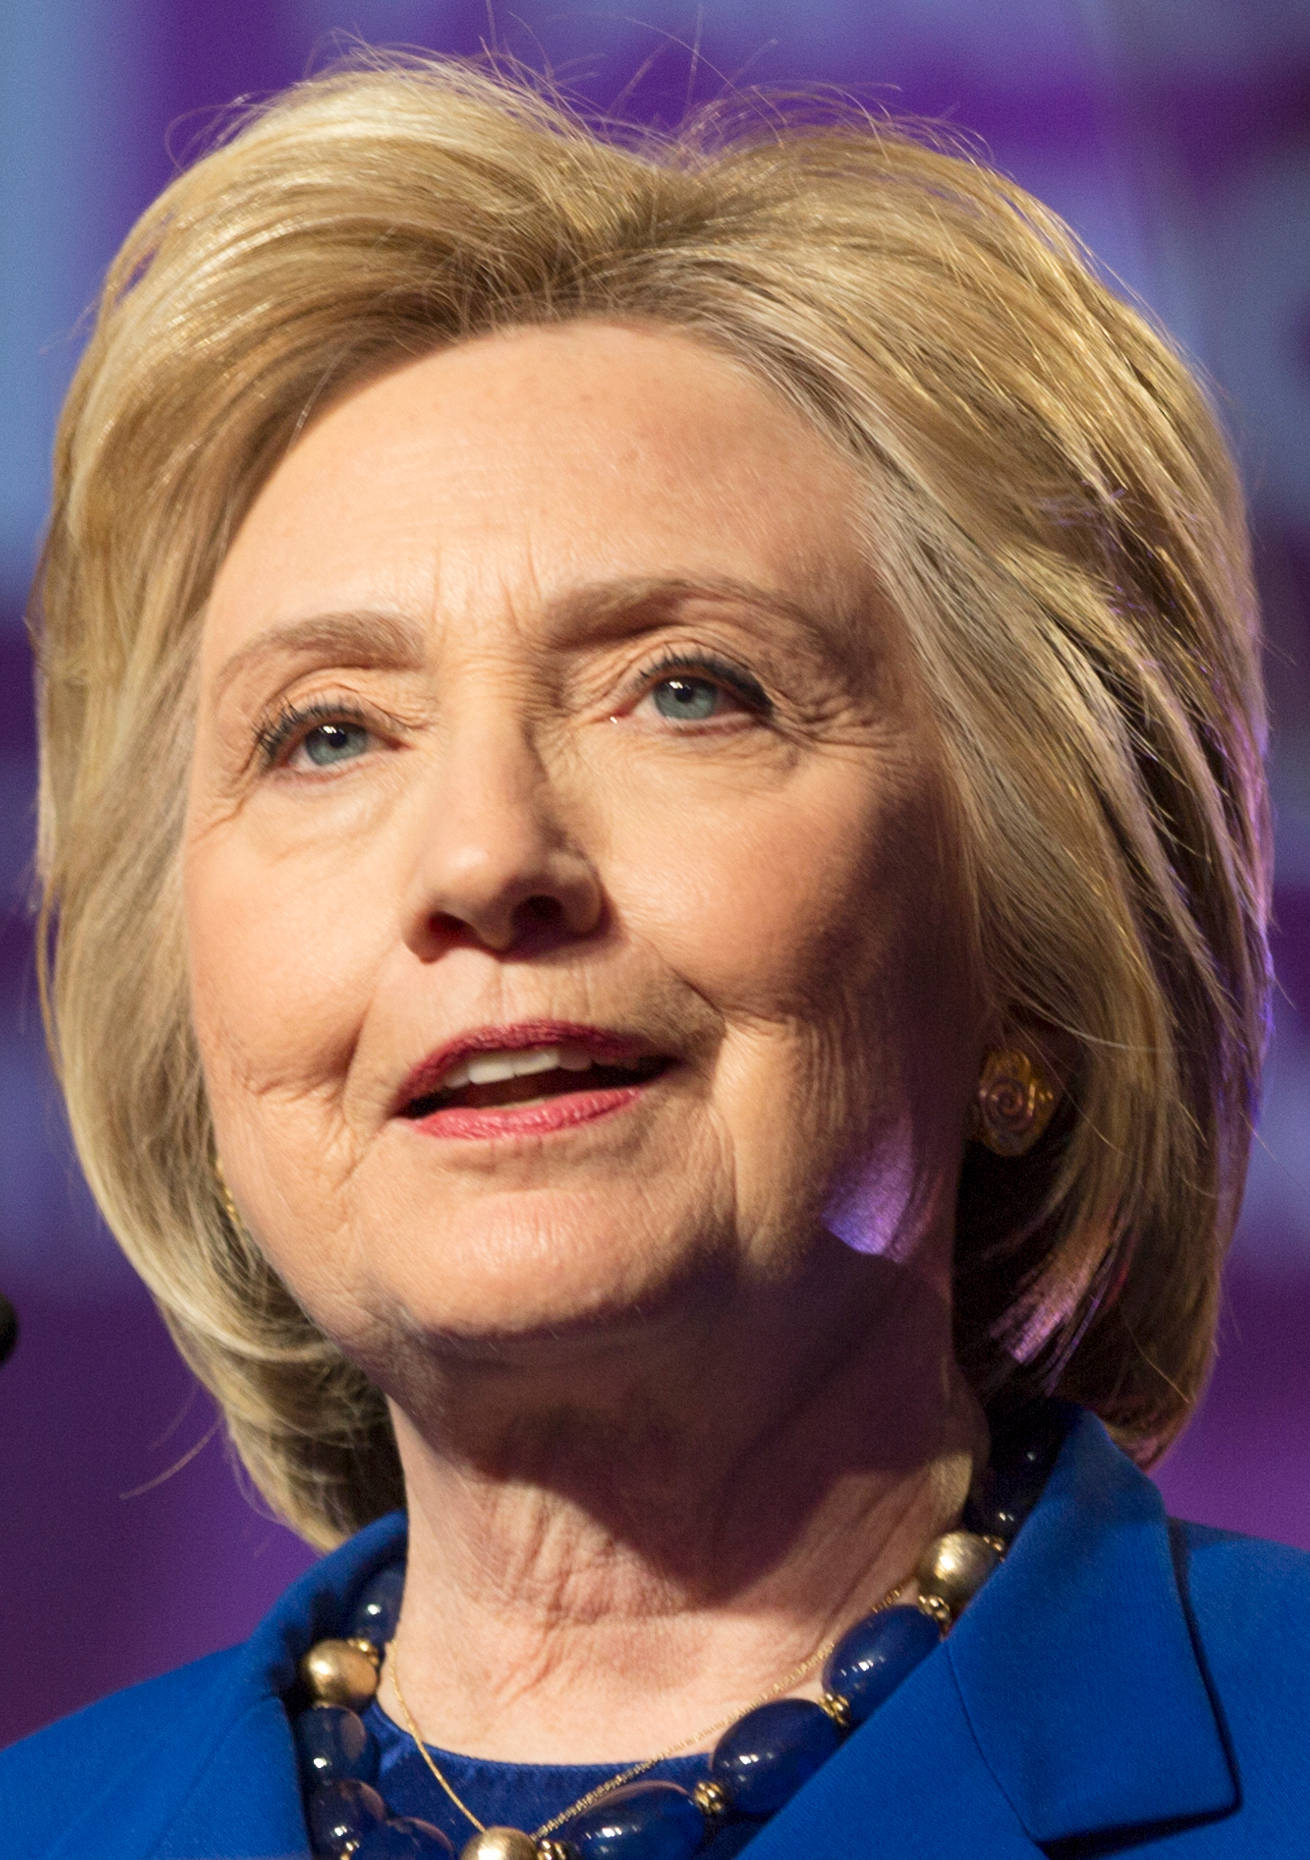 Hillary Clinton Close-up Look Wallpaper